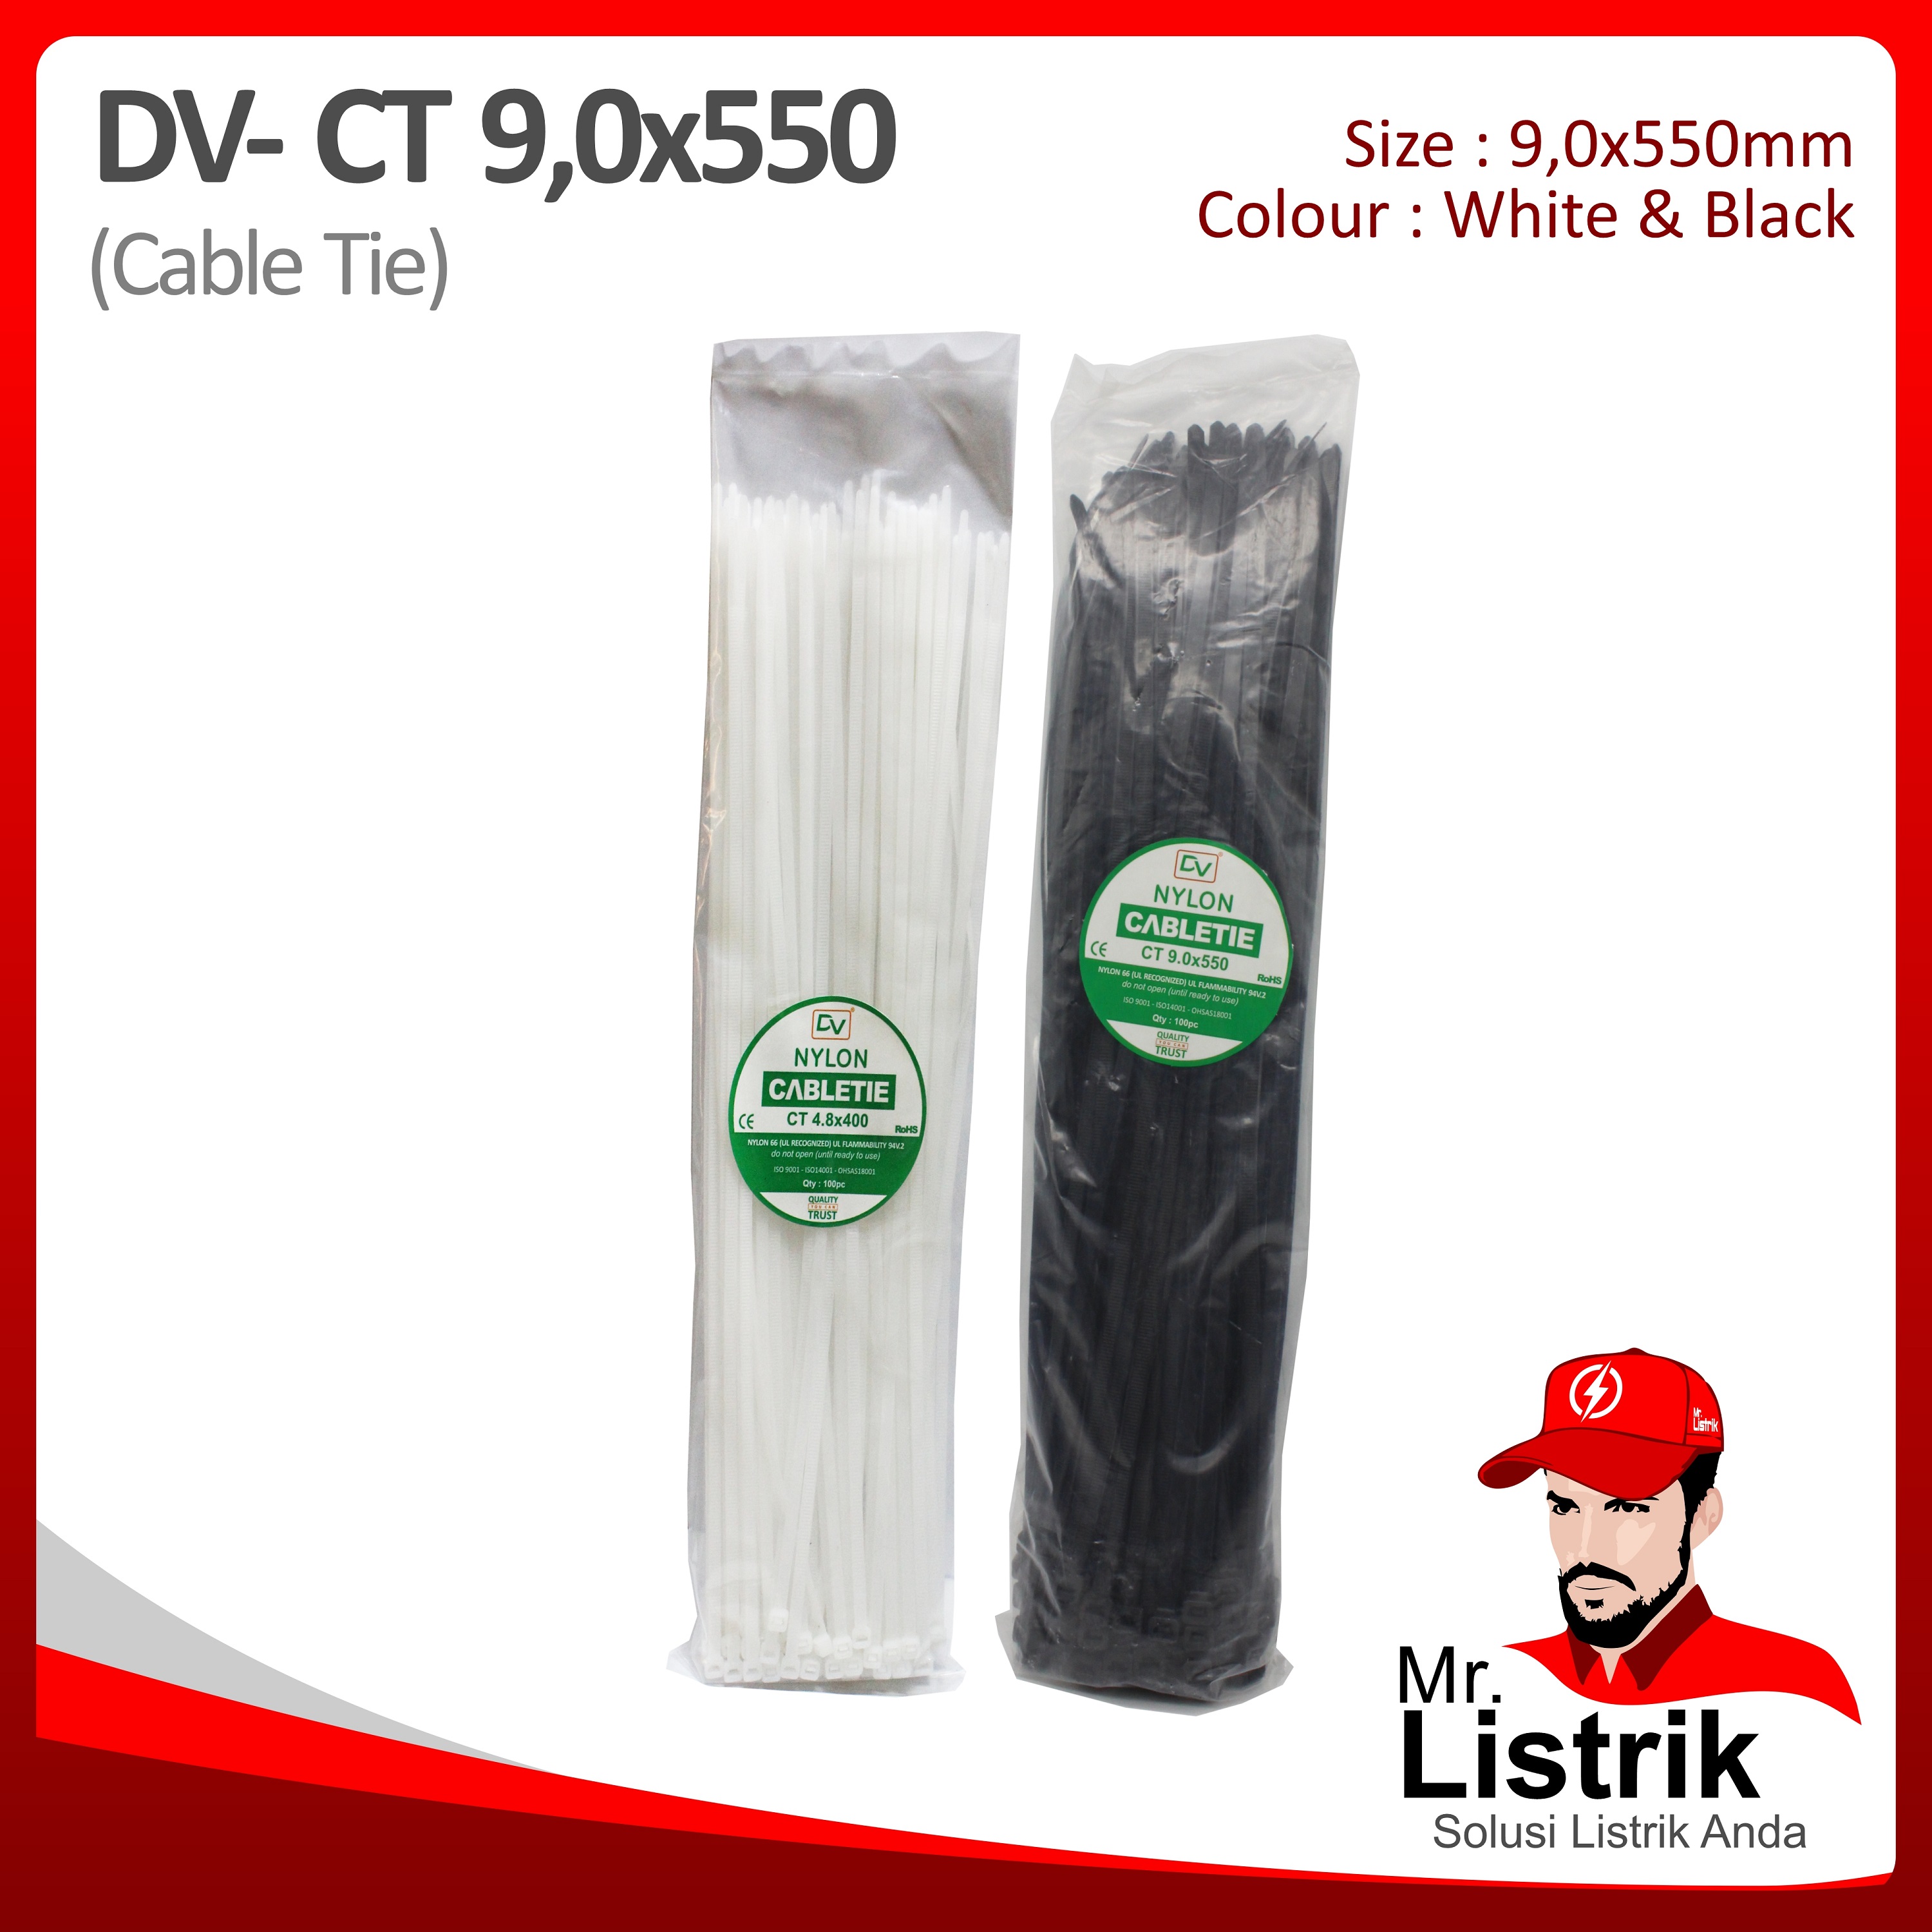 Cable Tie 9.0x550 DV CT9.0x550